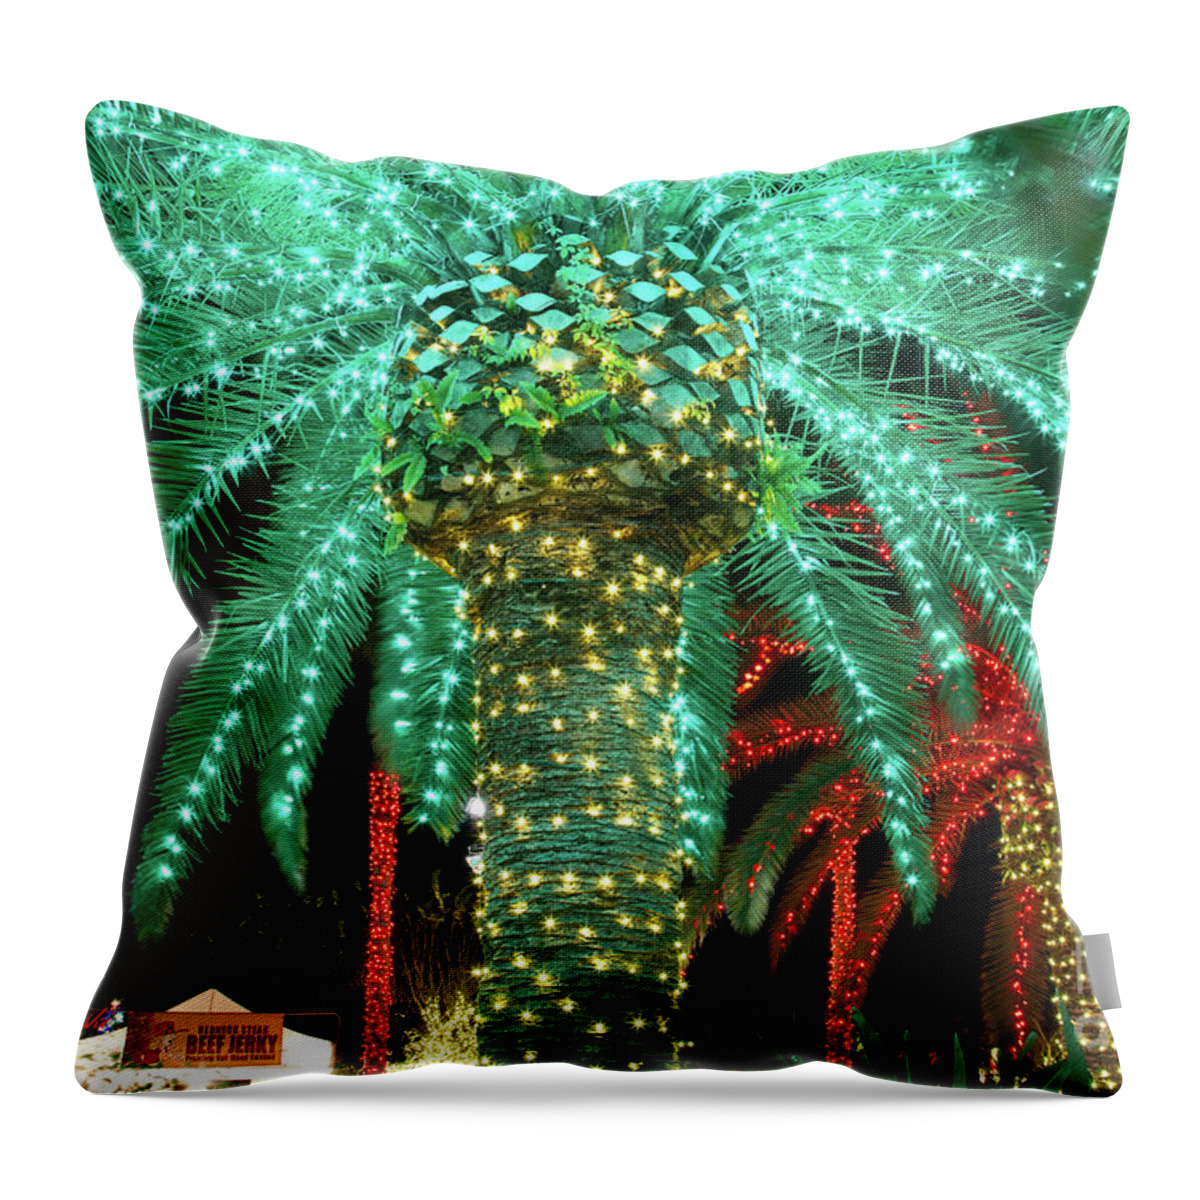 Botanical Garden Throw Pillow featuring the photograph Green Palms by Sue Karski